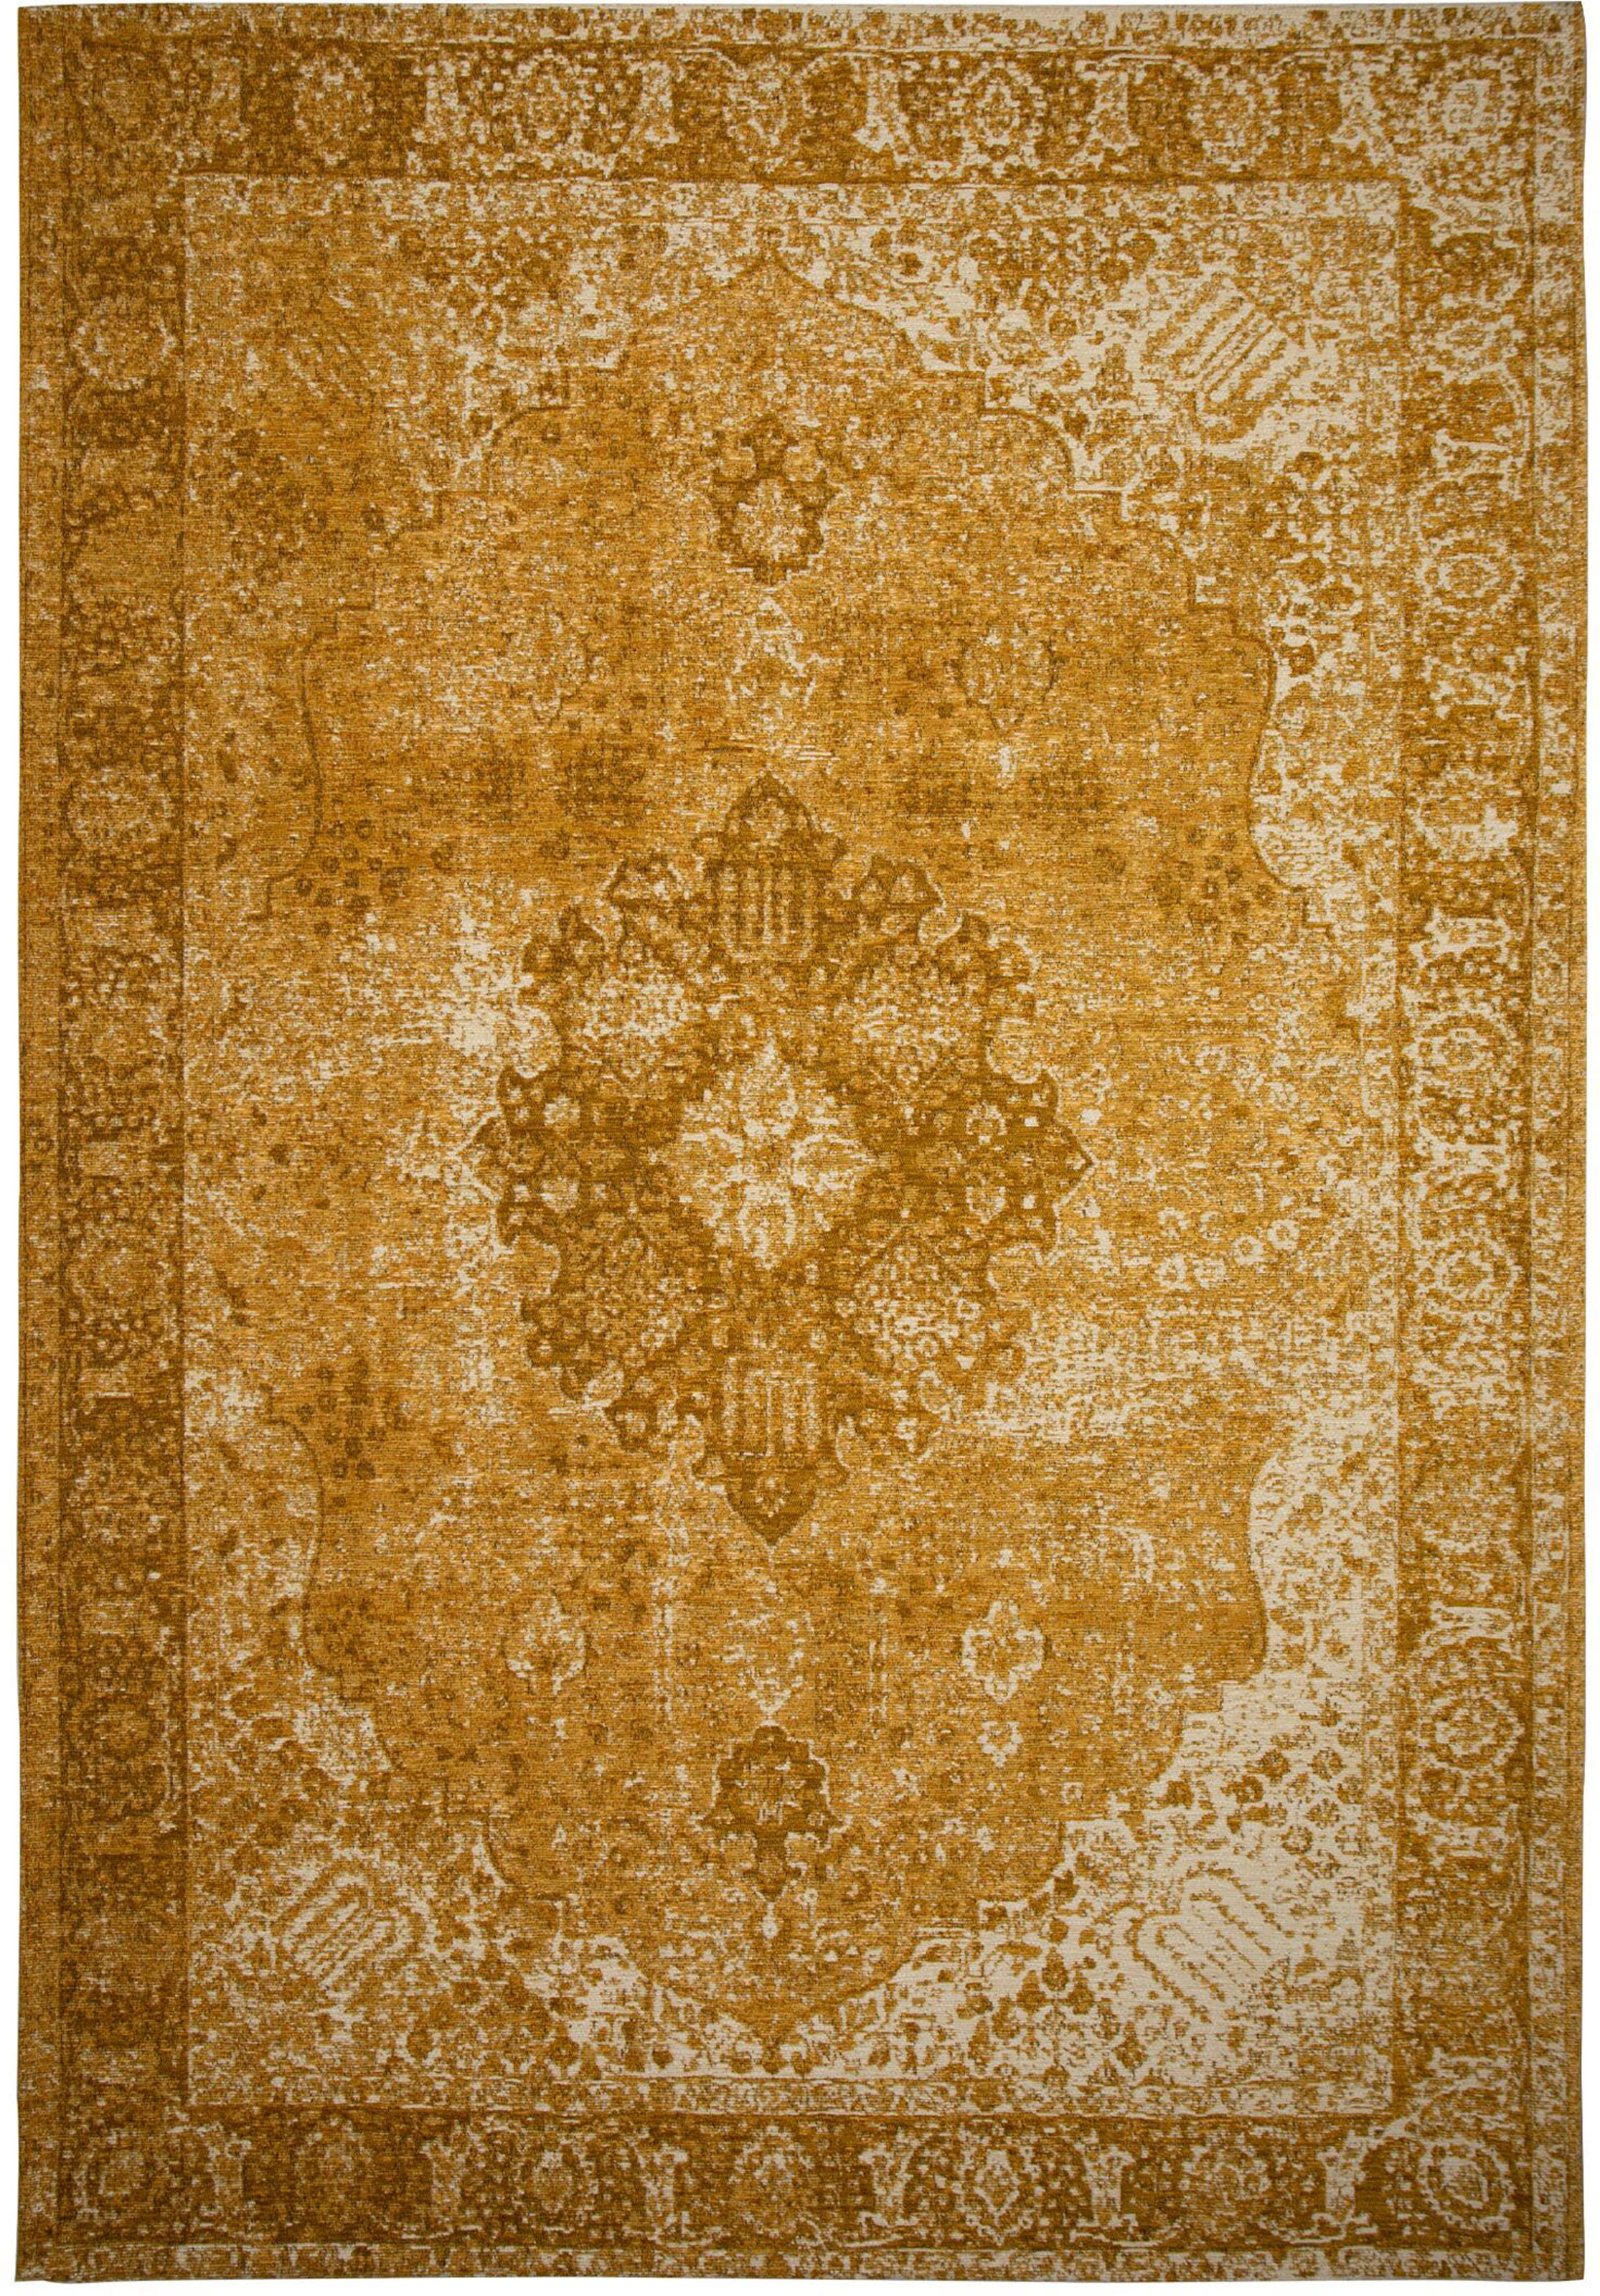 Teppich »Antique«, rechteckig, Vintage-Muster